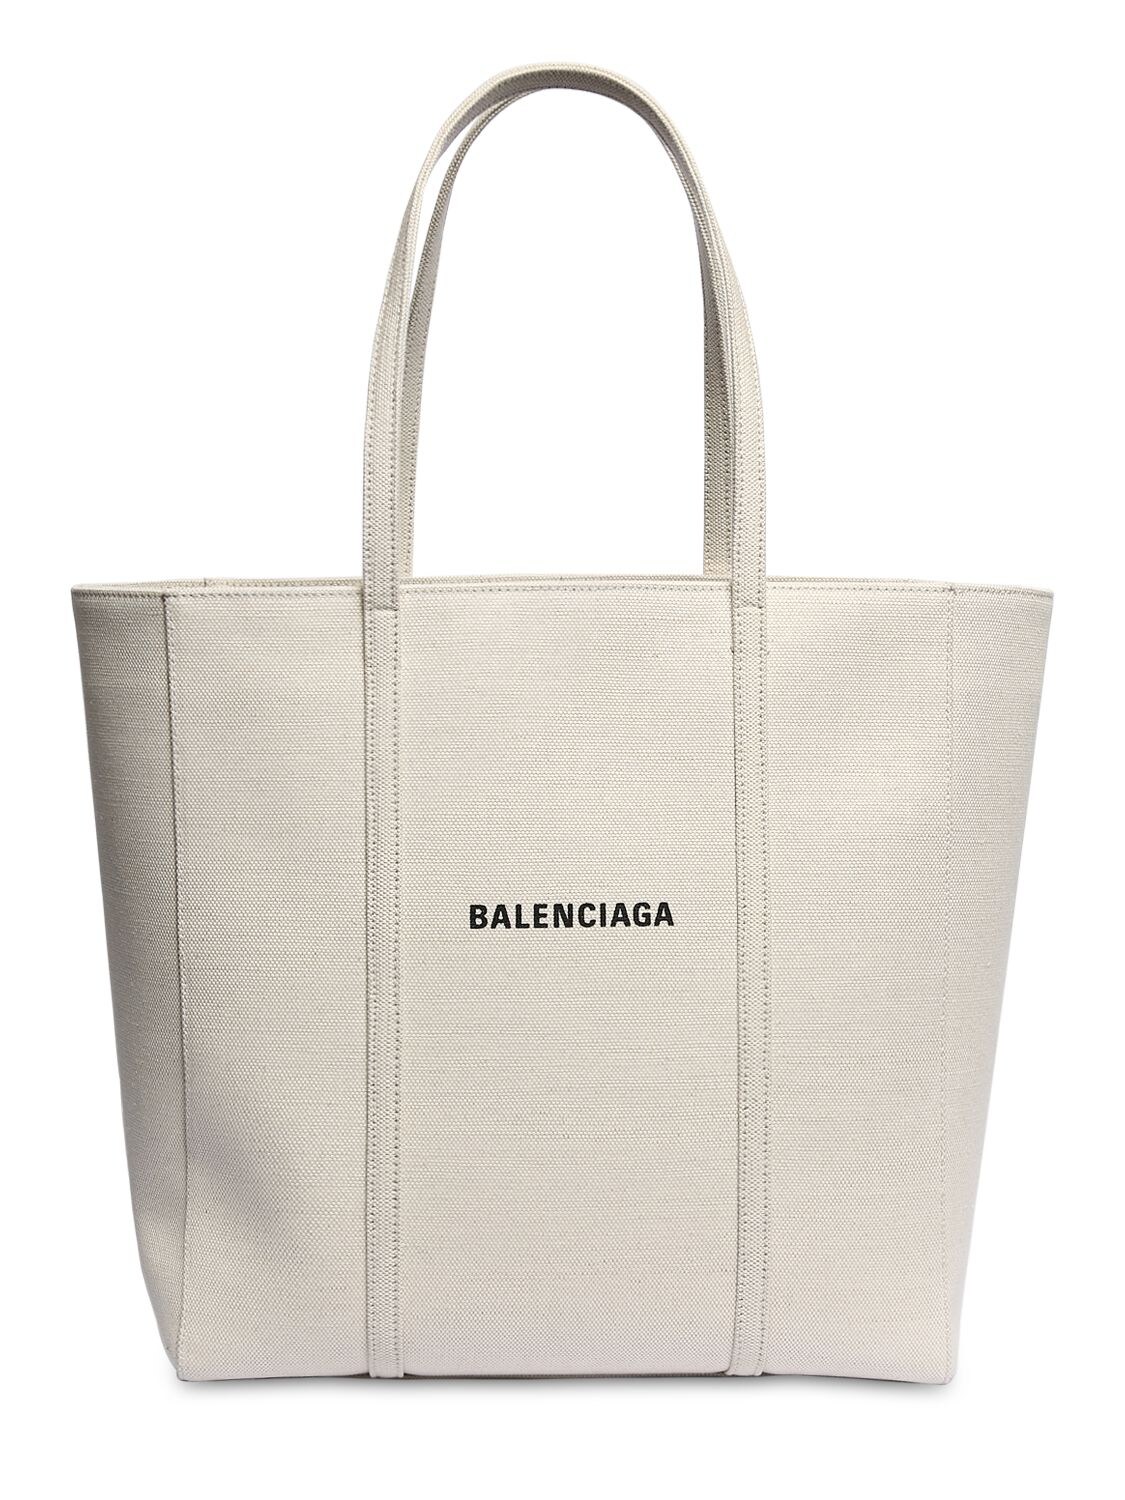 Balenciaga S Every Day Canvas Tote Bag In Natural